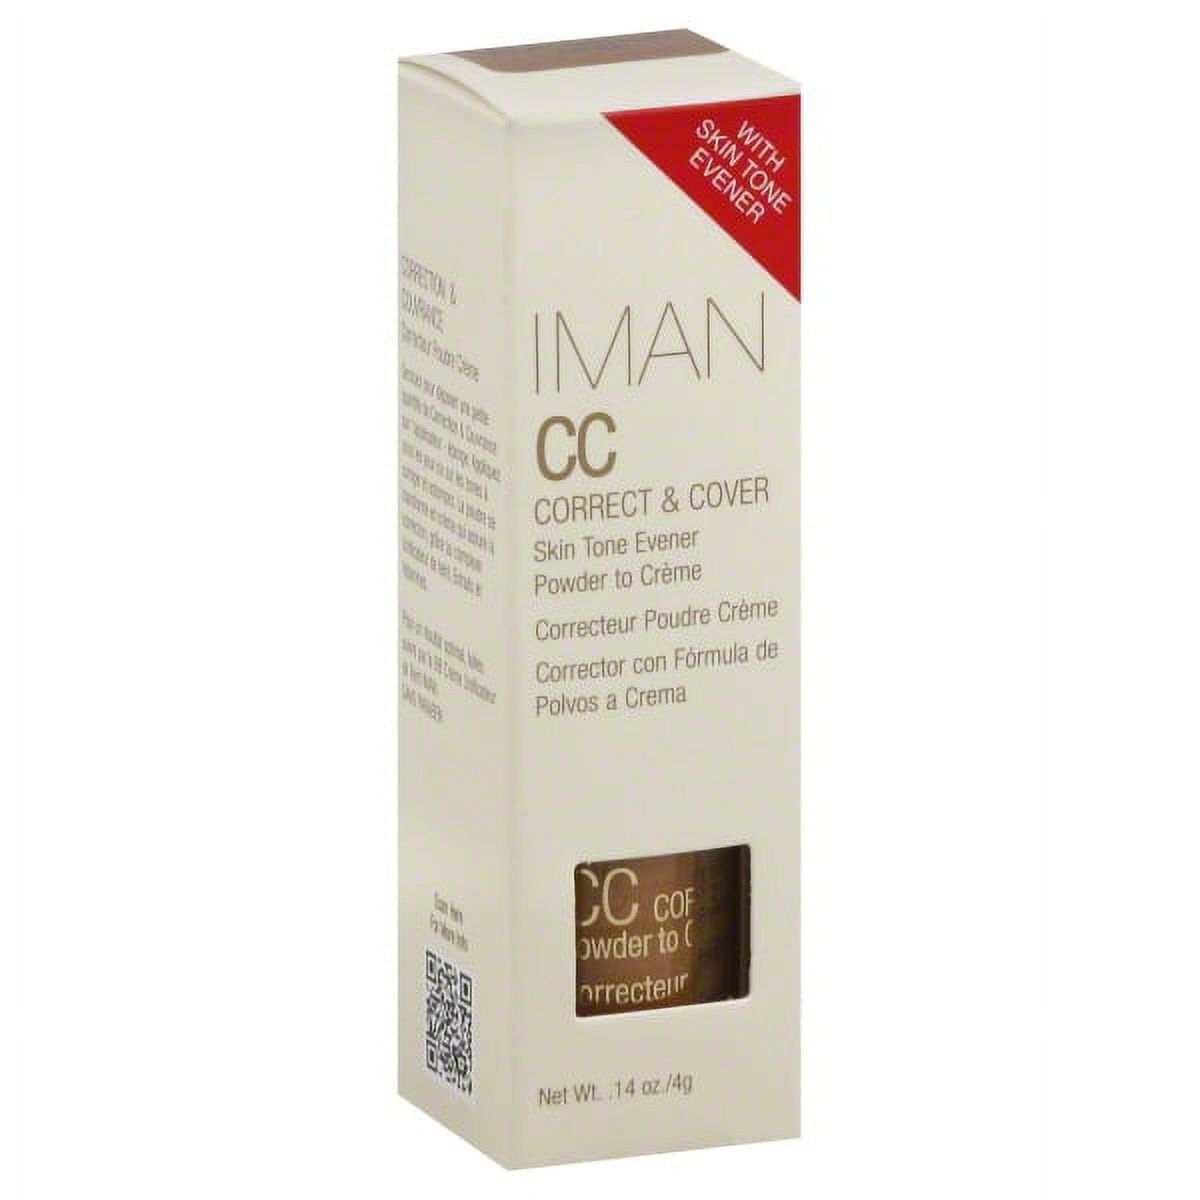 IMAN Cosmetics IMAN Correct & Cover Skin Tone Evener, 0.14 oz - image 1 of 4